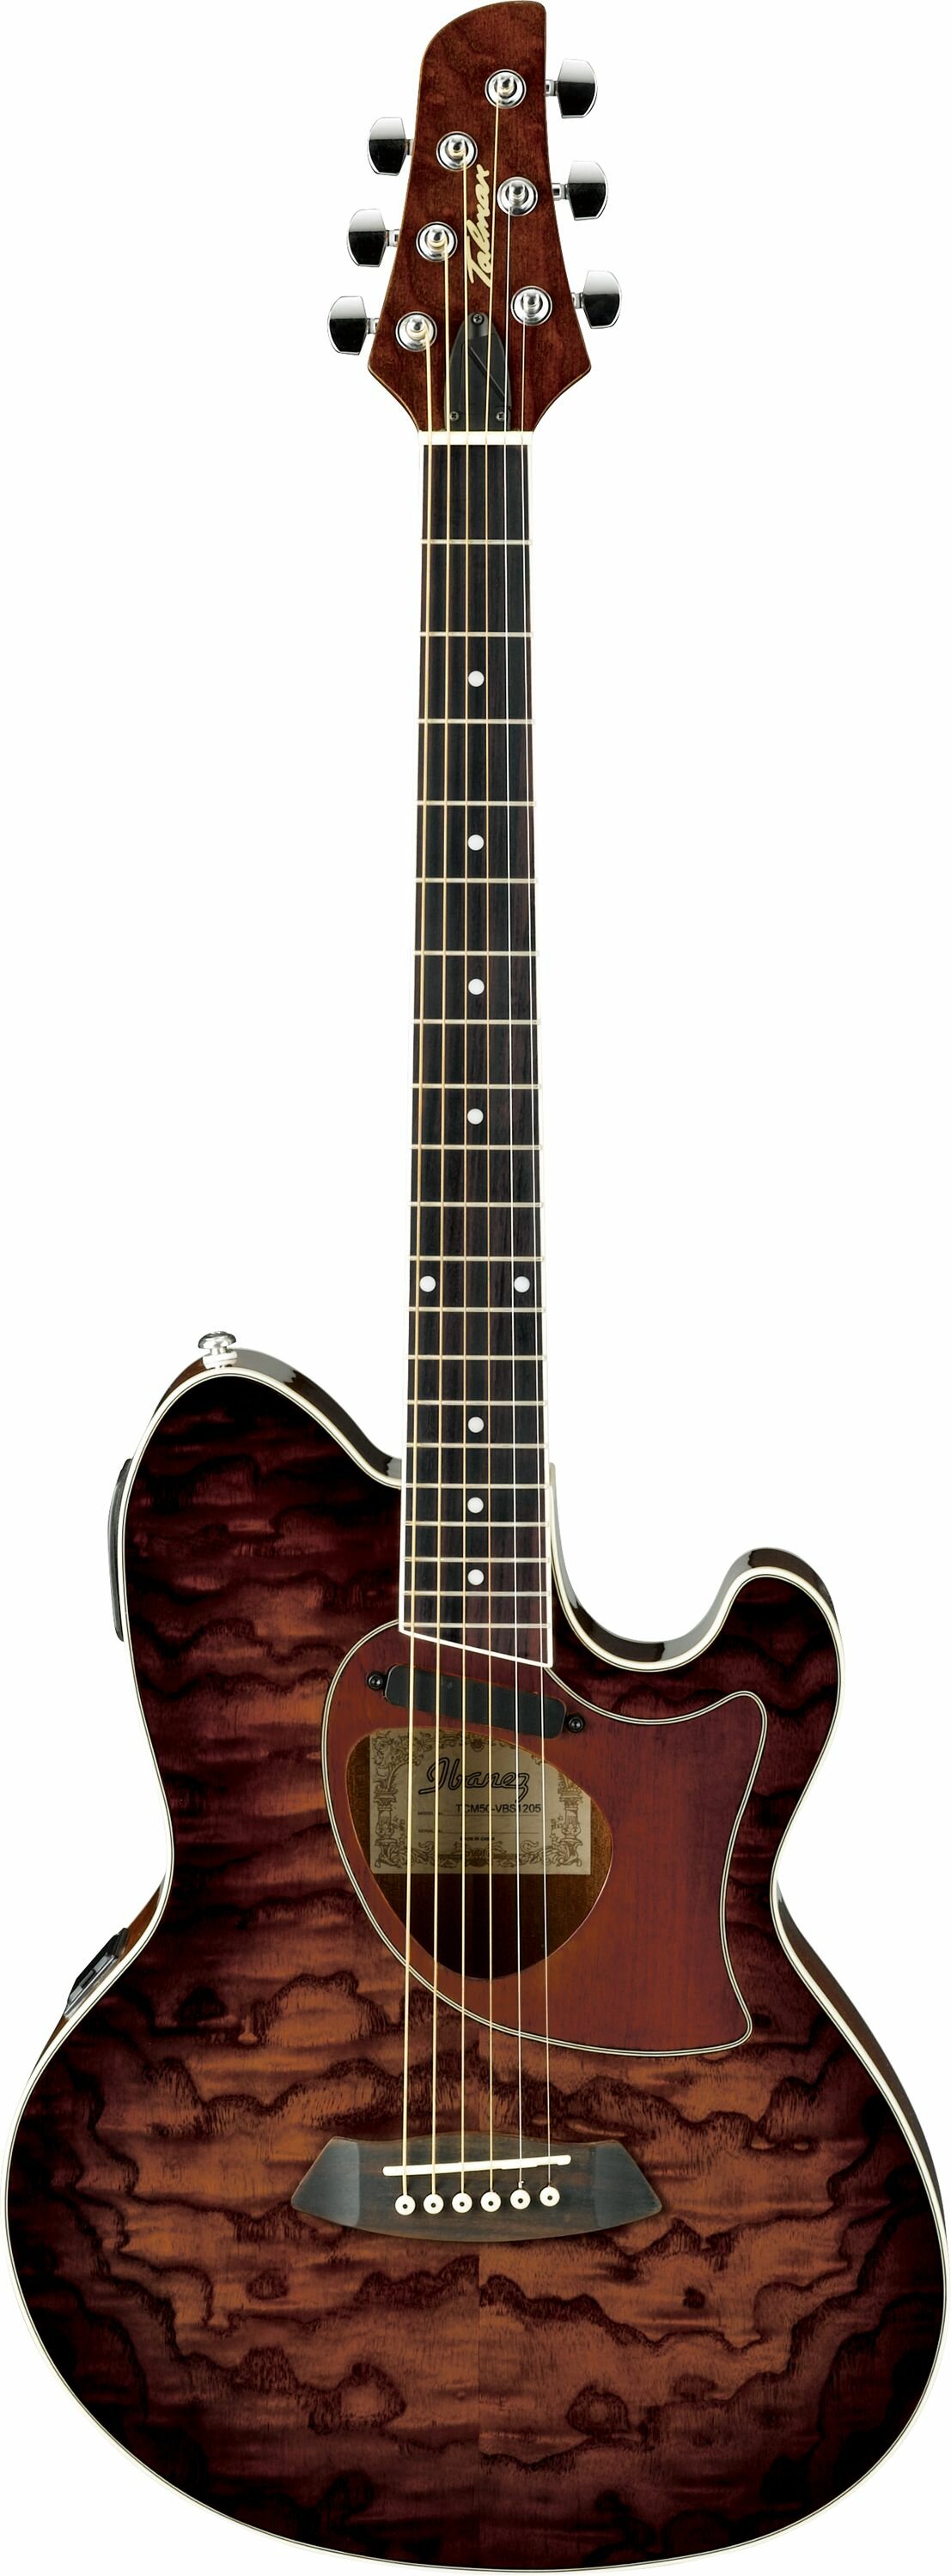 IBANEZ TCM50-VBS акустическая гитара цвет санберст корпус махагон верхняя дека ясень гриф махагон накладка палисандр 19 ладов вырез бридж пали